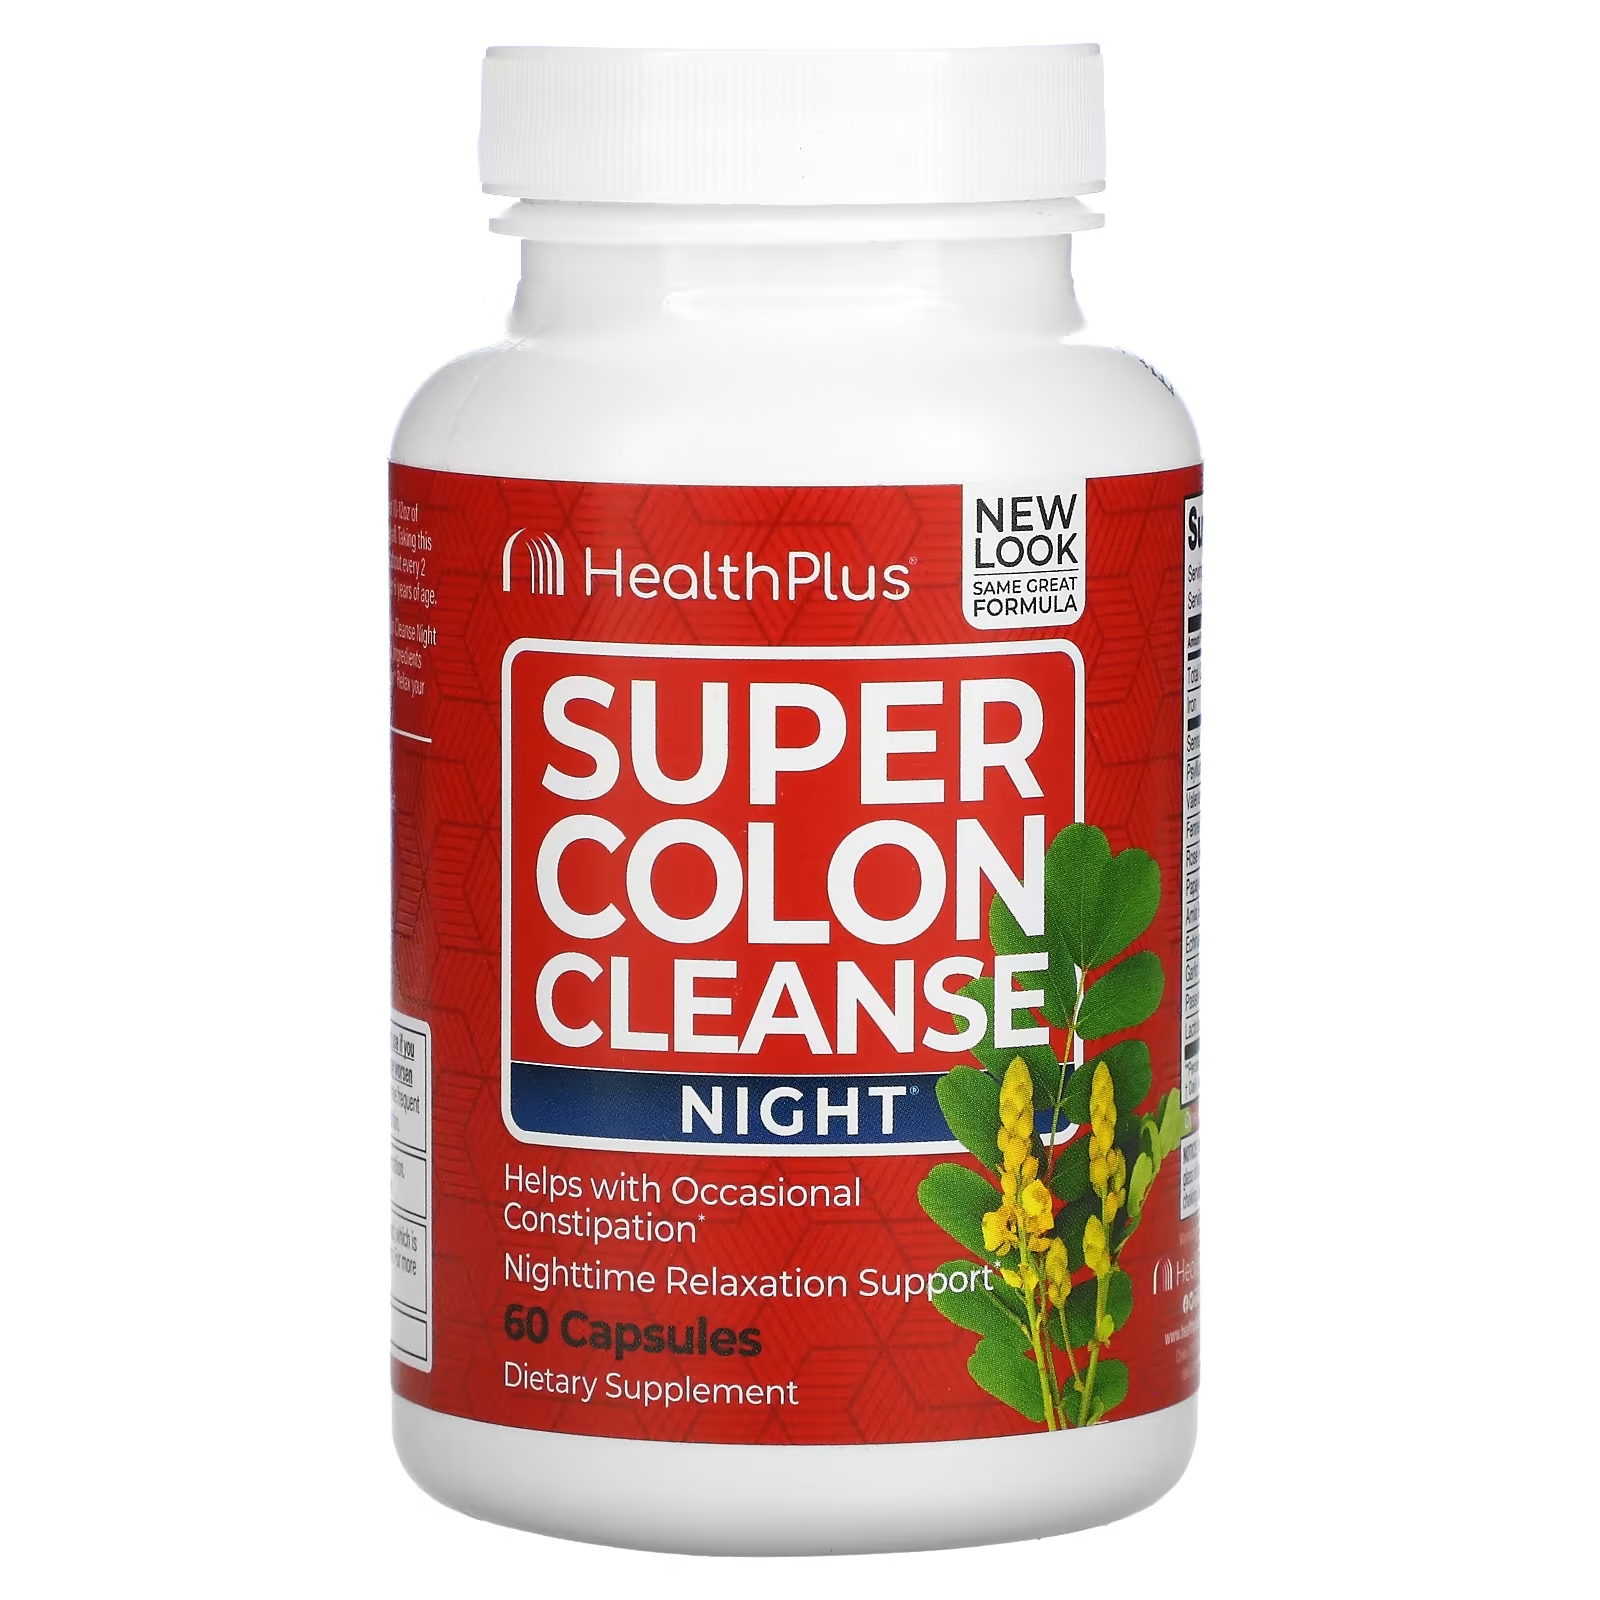 Health Plus Super Colon Cleanse средство для ночной очистки кишечника, 60 капсул health direct slimit средство для похудения 56 капсул